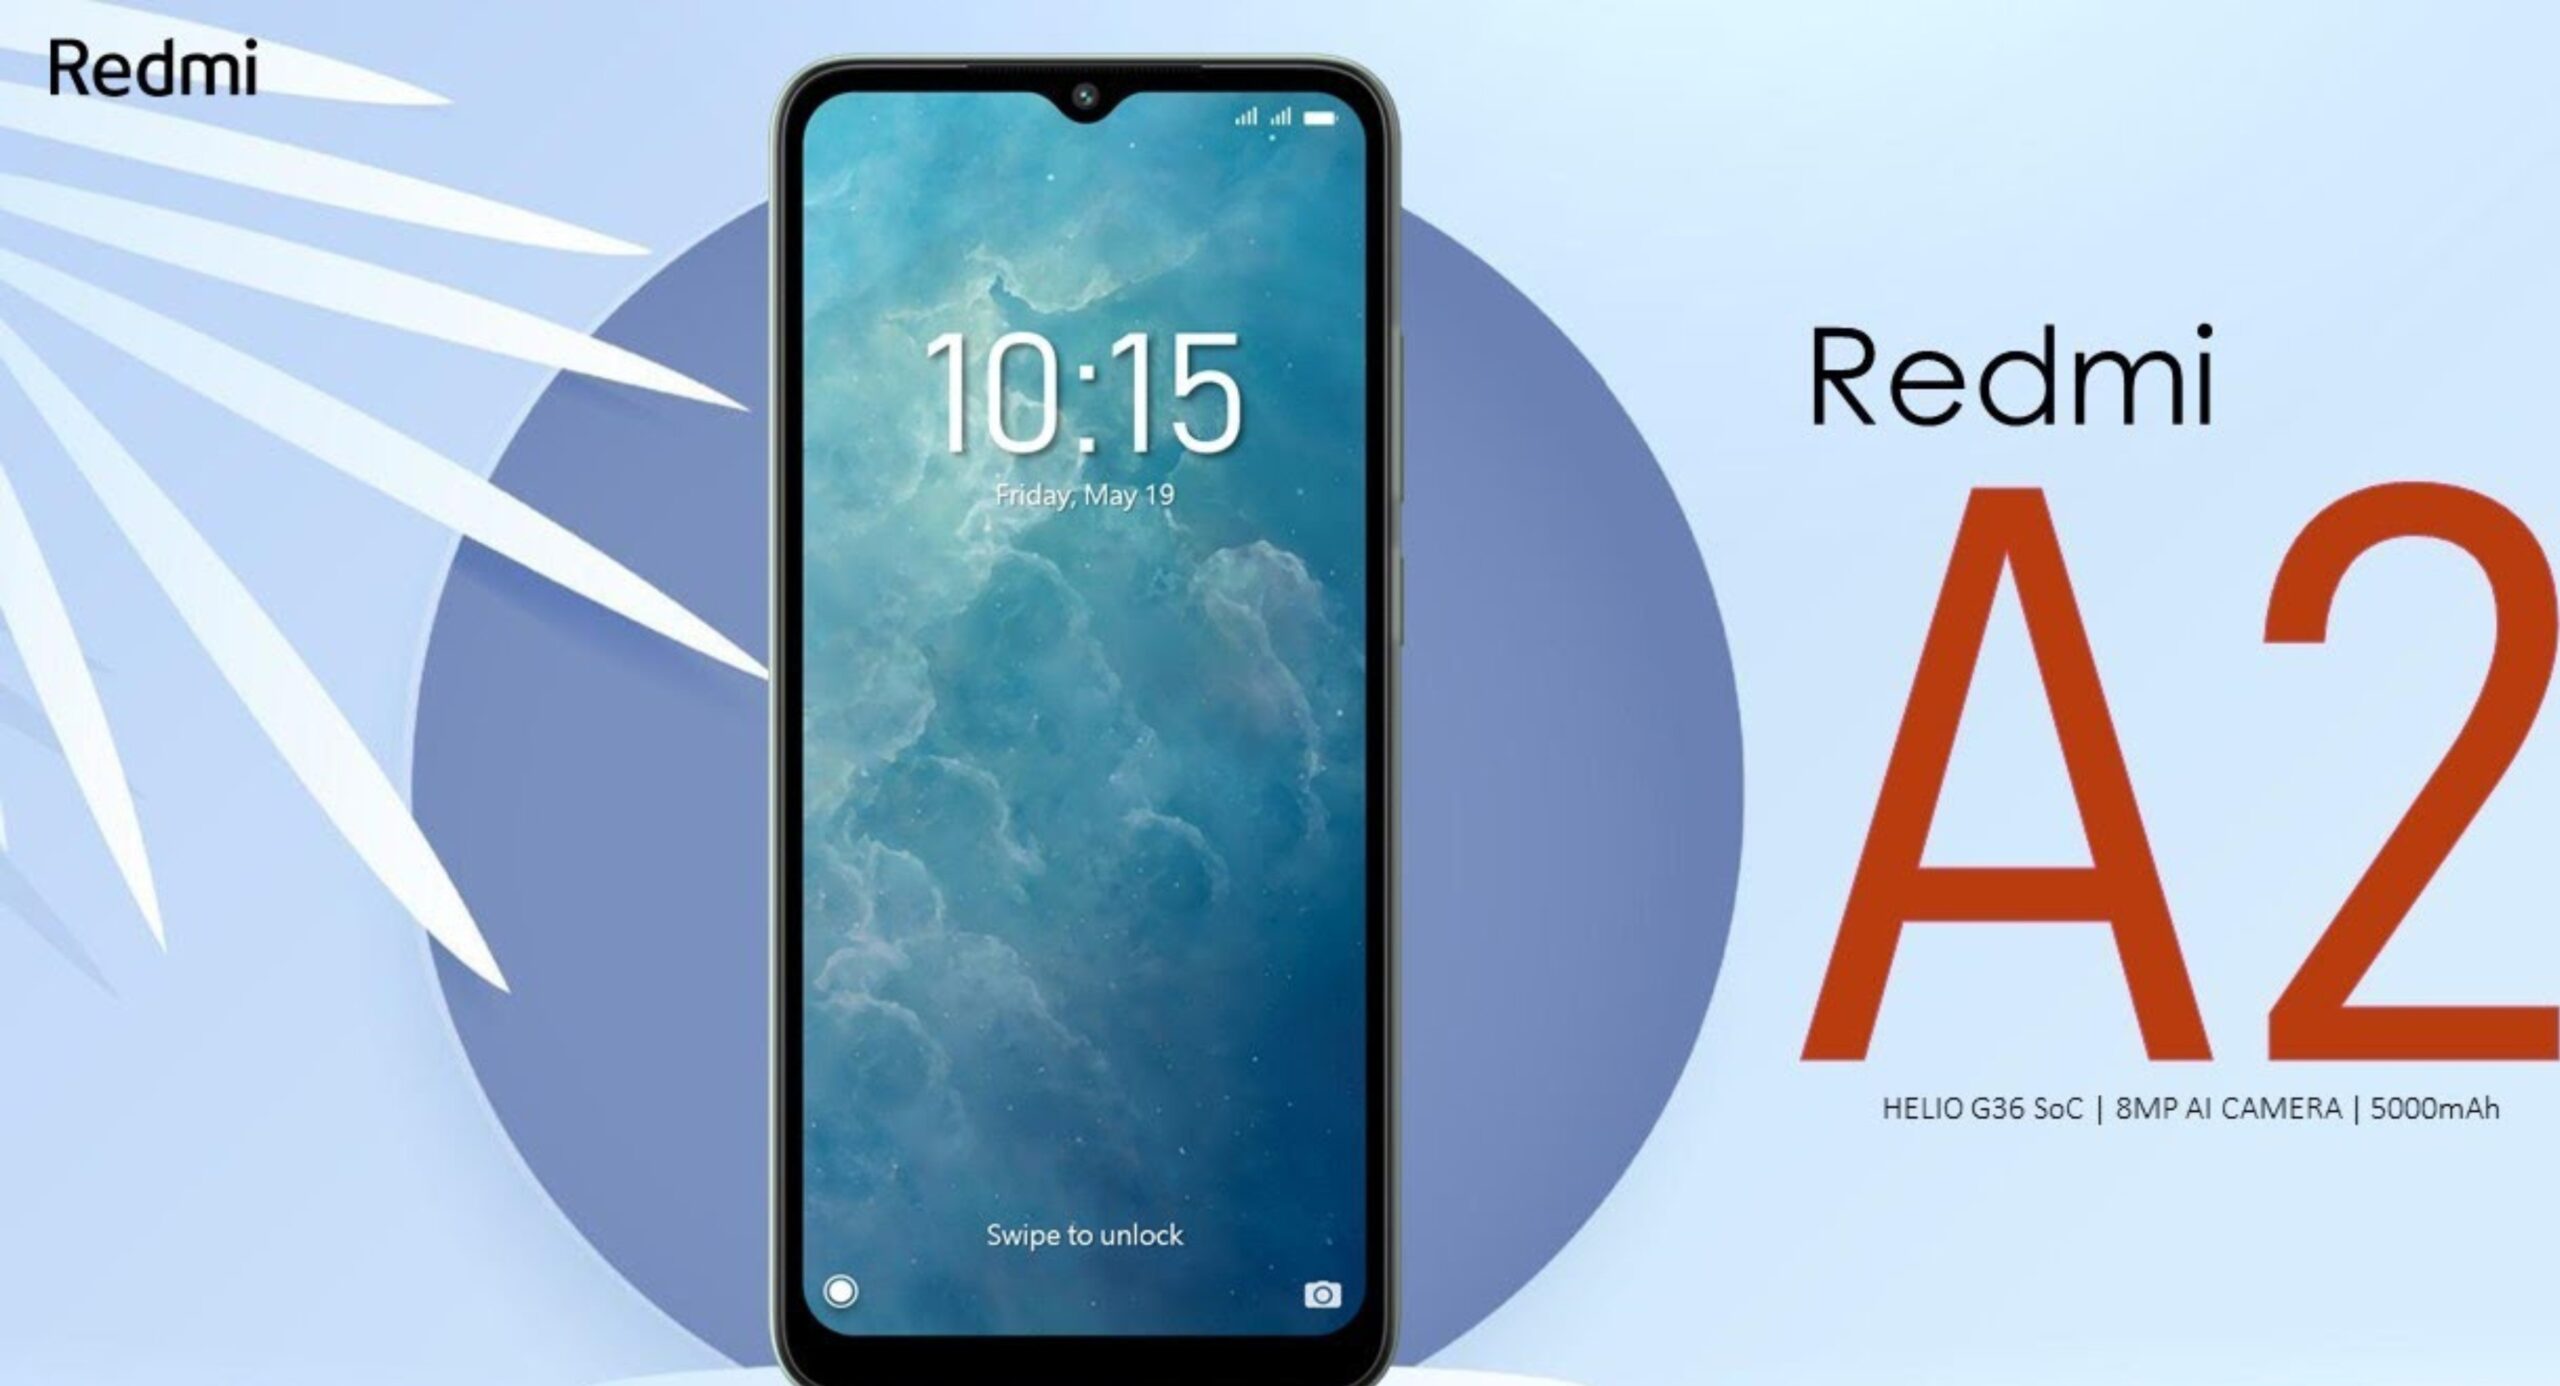 Redmi A2 new smartphone on sale